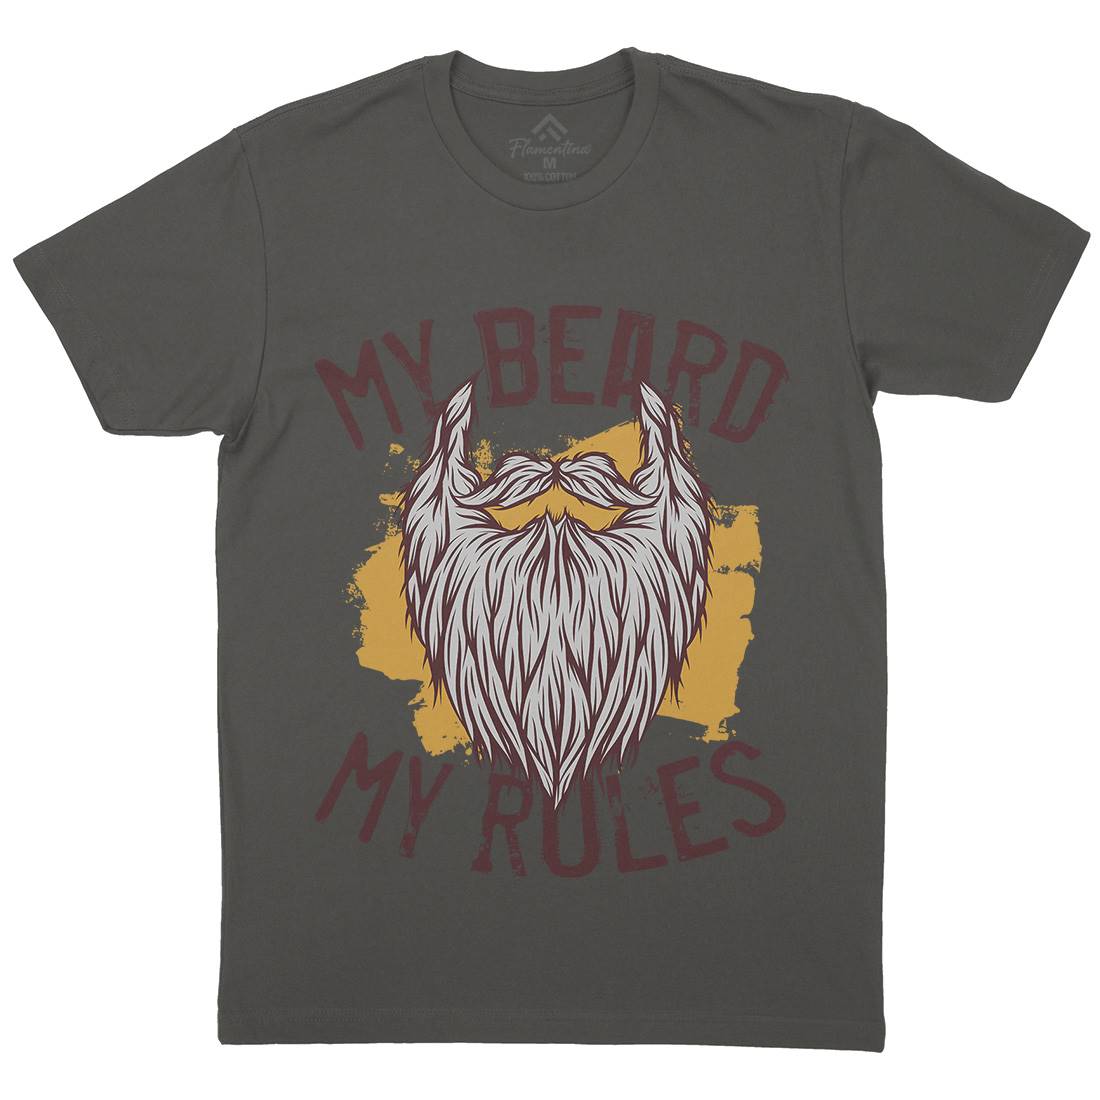 My Beard Rules Mens Organic Crew Neck T-Shirt Barber C808